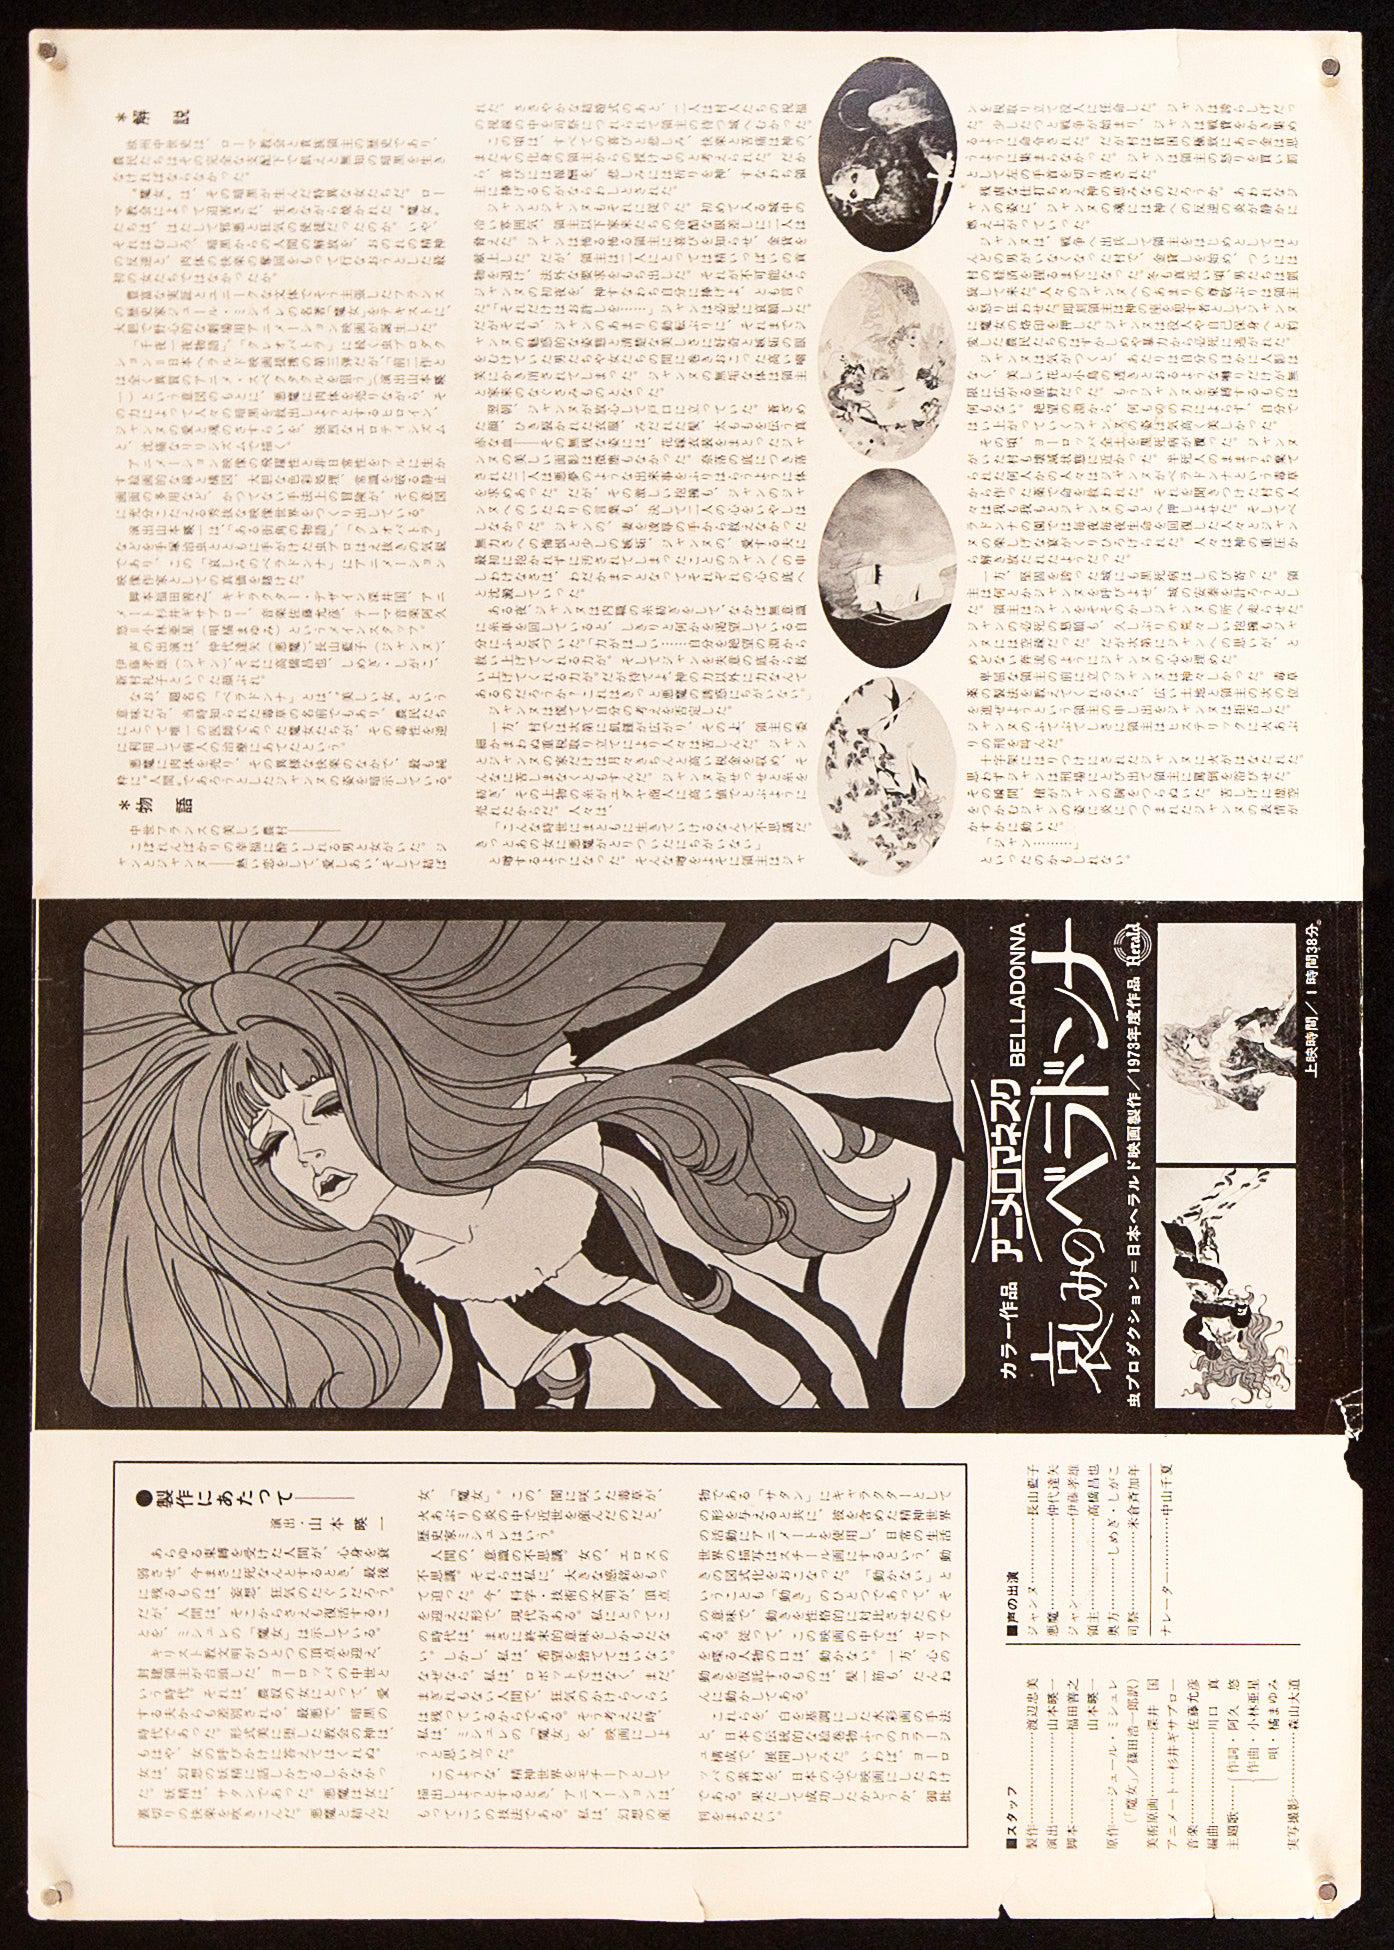 Belladonna Japanese B3 (14x20) Original Vintage Movie Poster